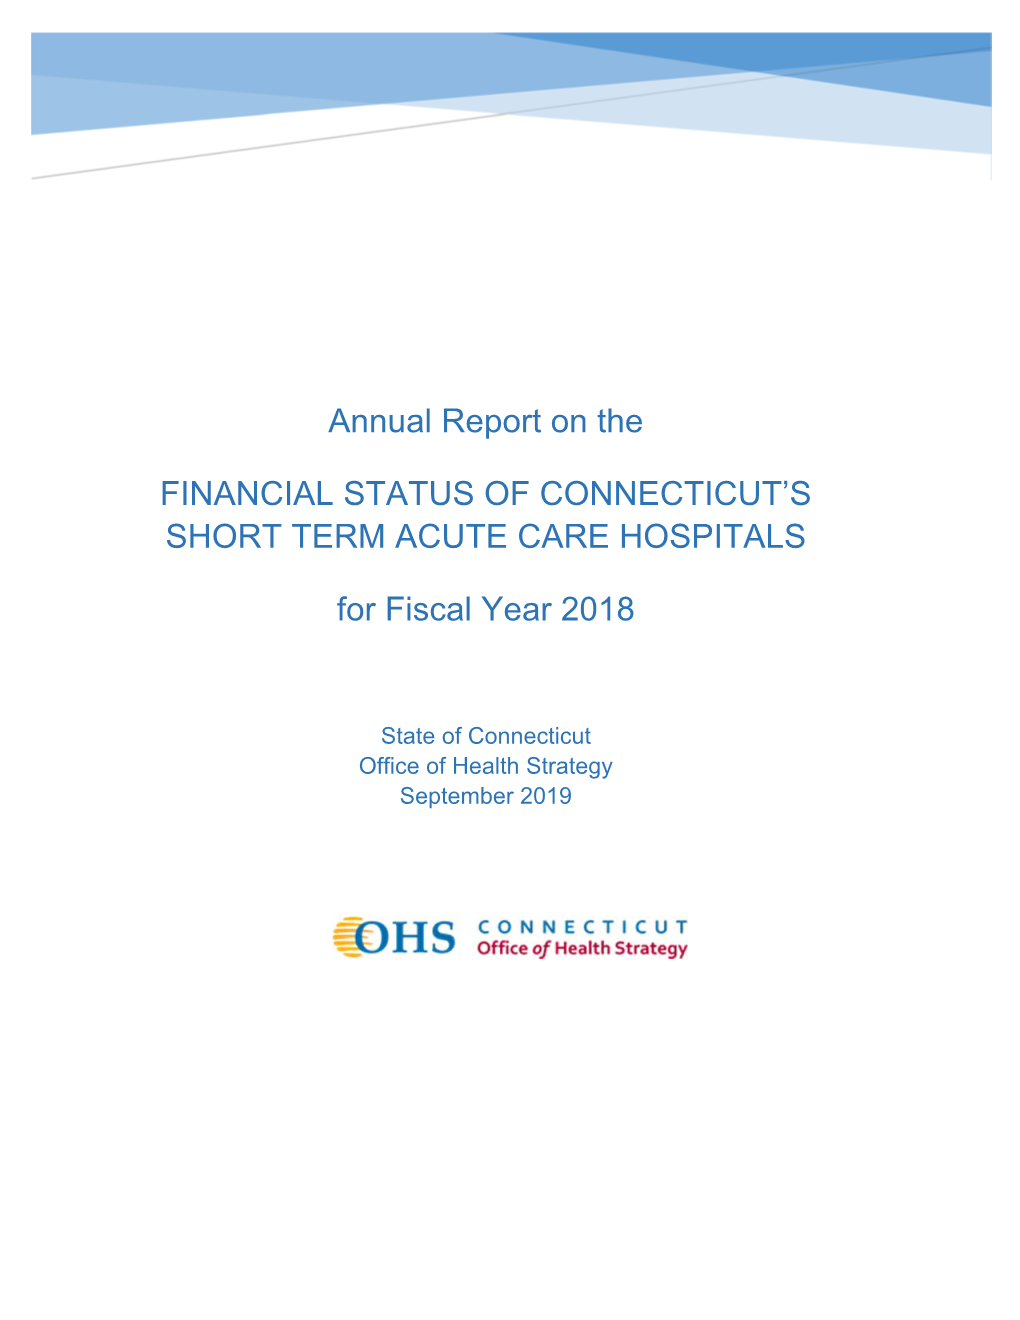 Financial Status of Connecticut's Short Term Acute Care Hospitals 2018